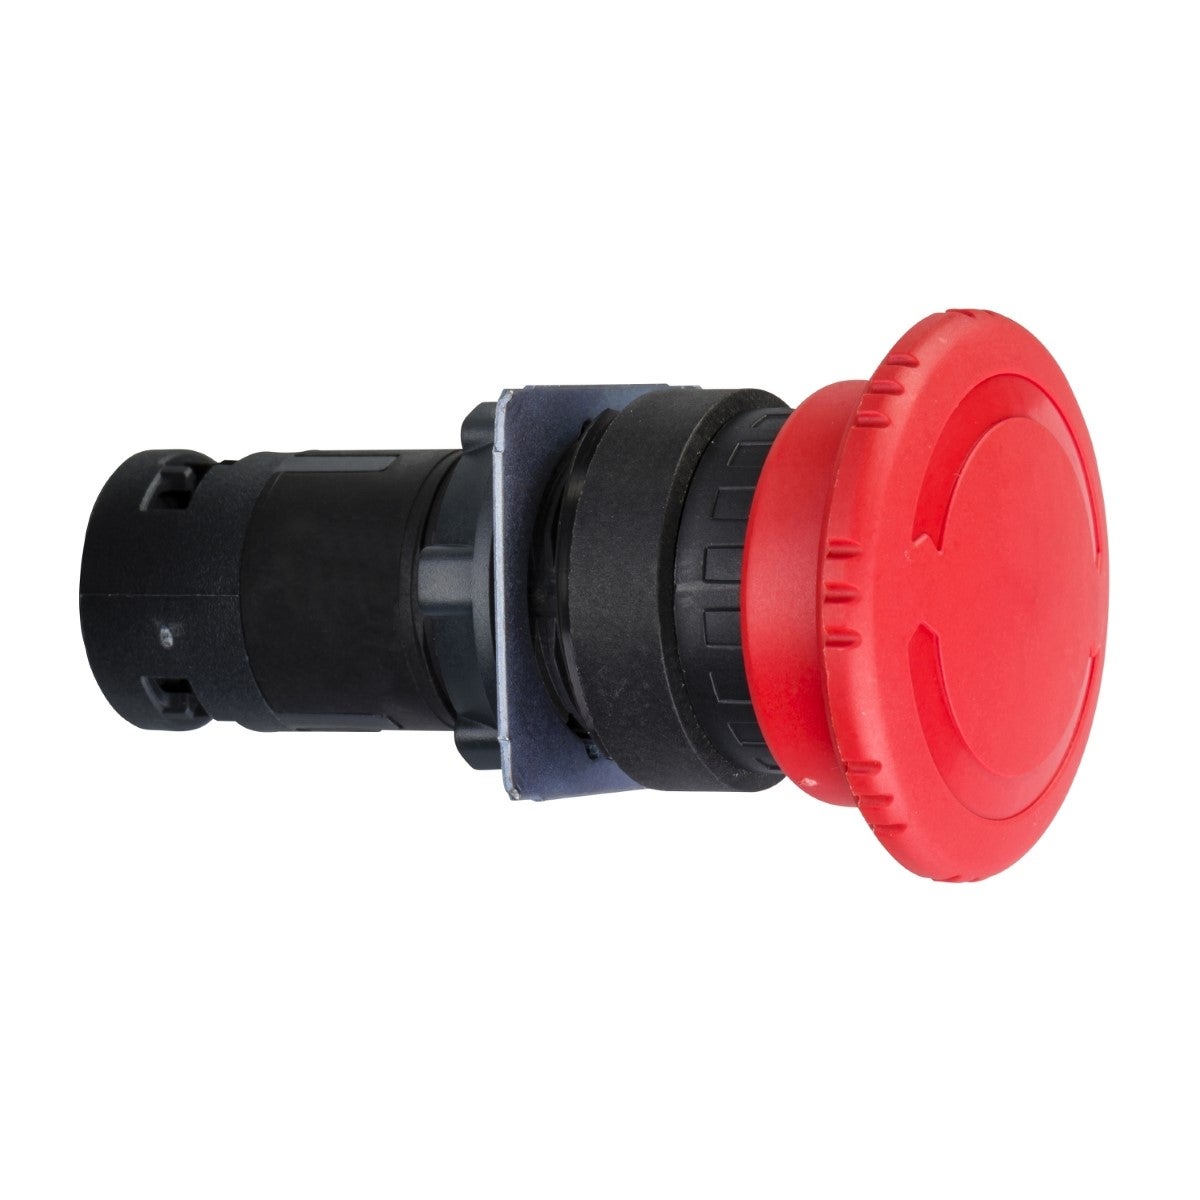 Emergency switching off Ã˜ 22 - red mushroom head Ã˜ 40 mm - turn to release 1 NC